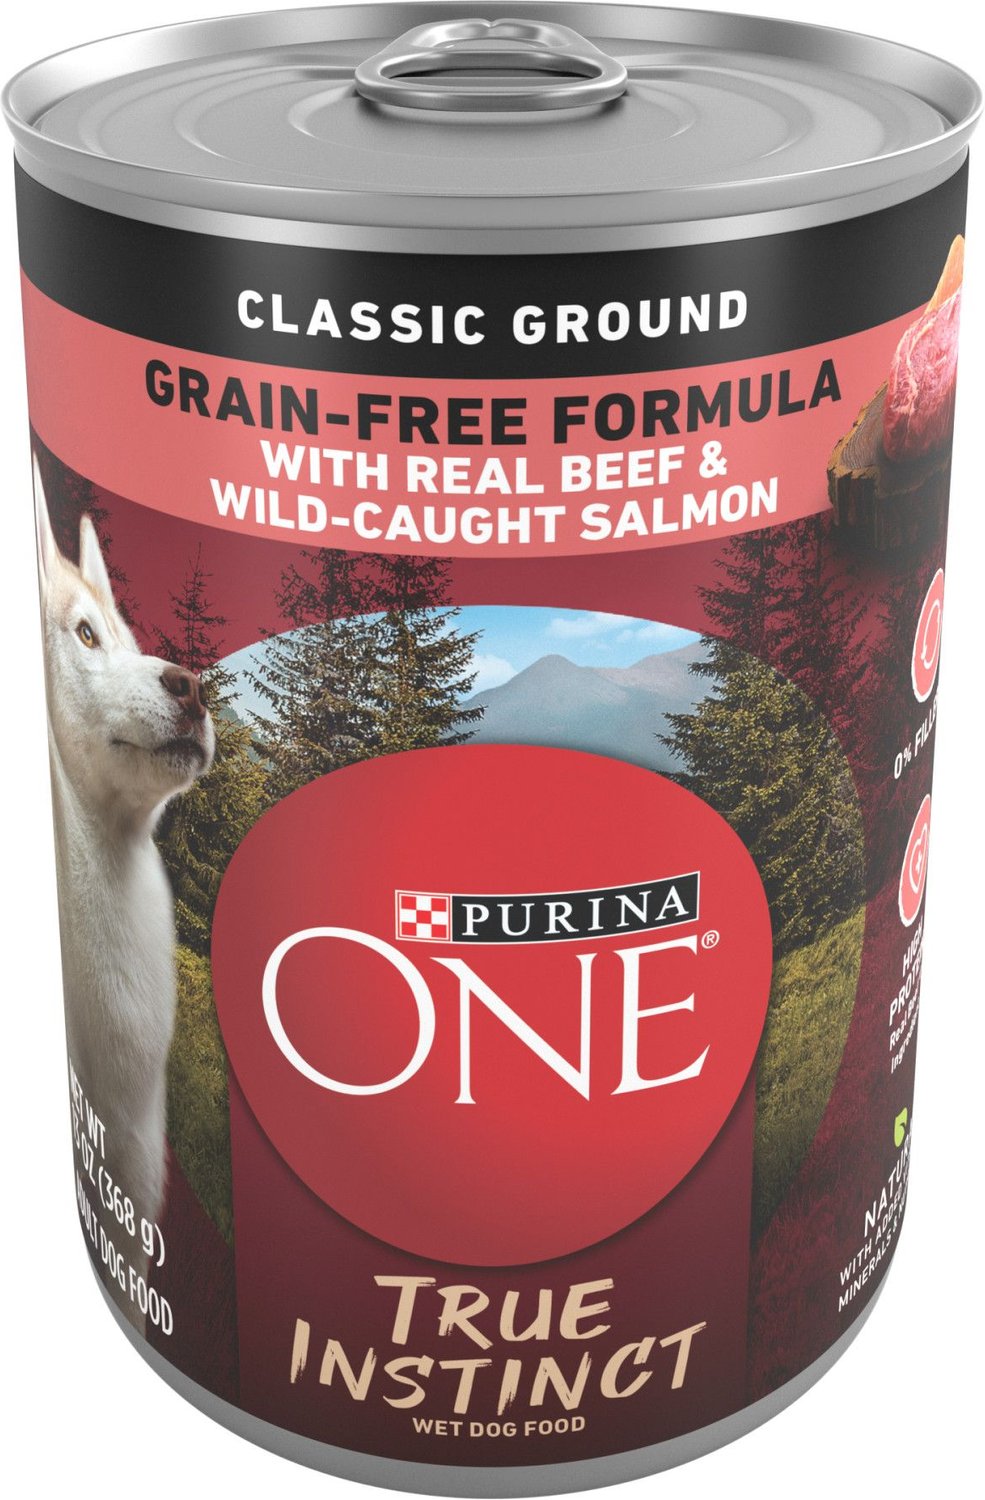 purina one true instinct dog food ingredients